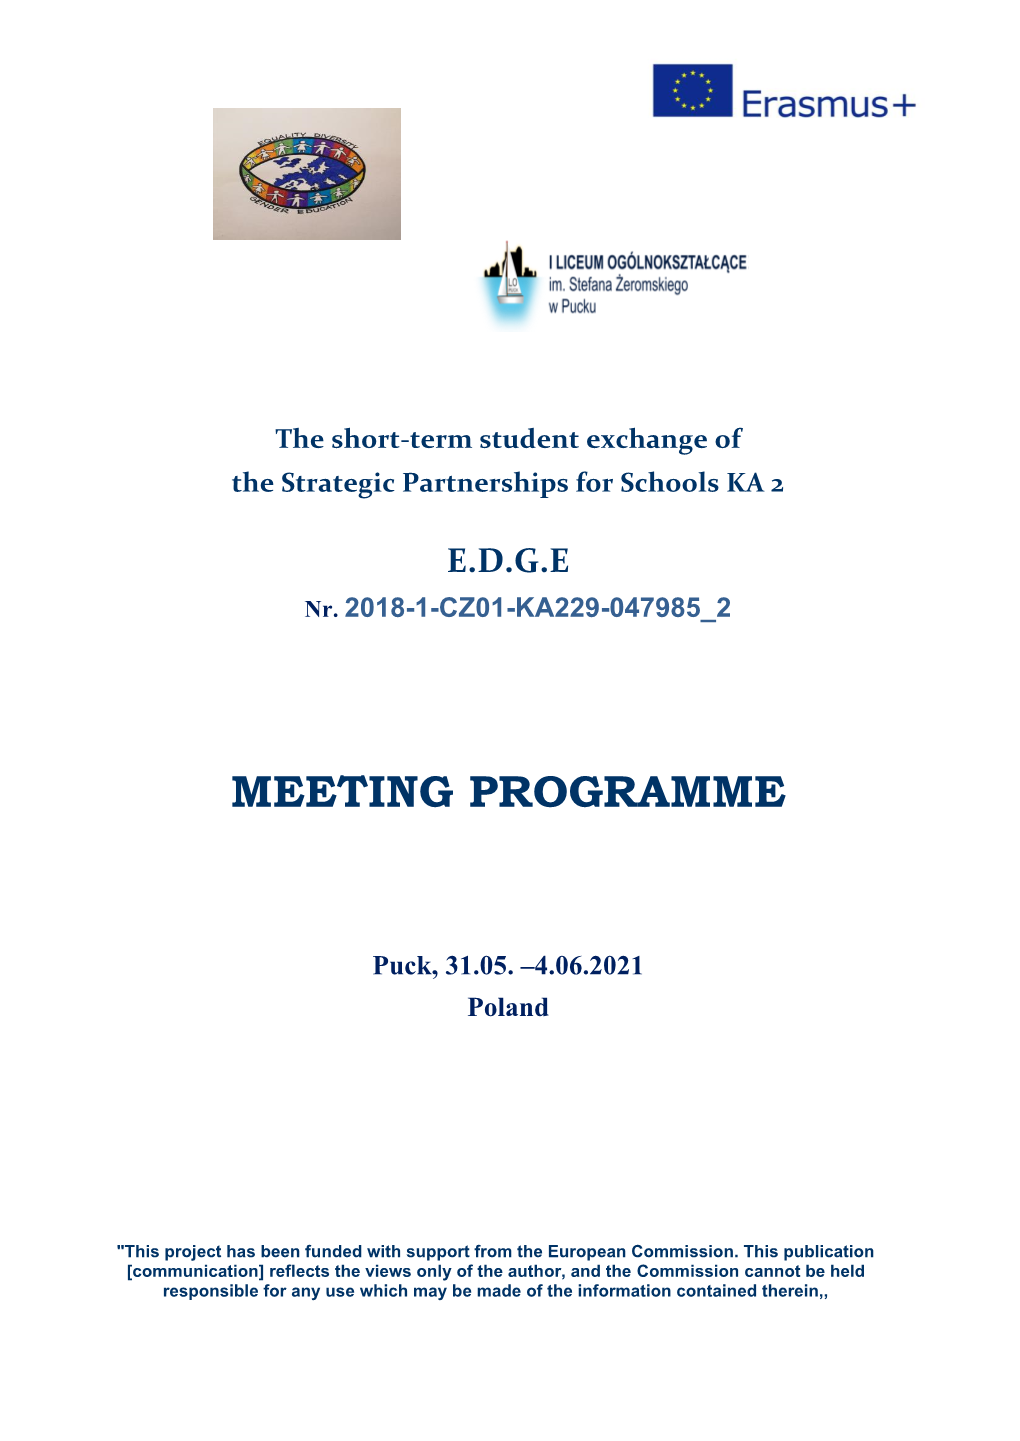 Meeting Programme